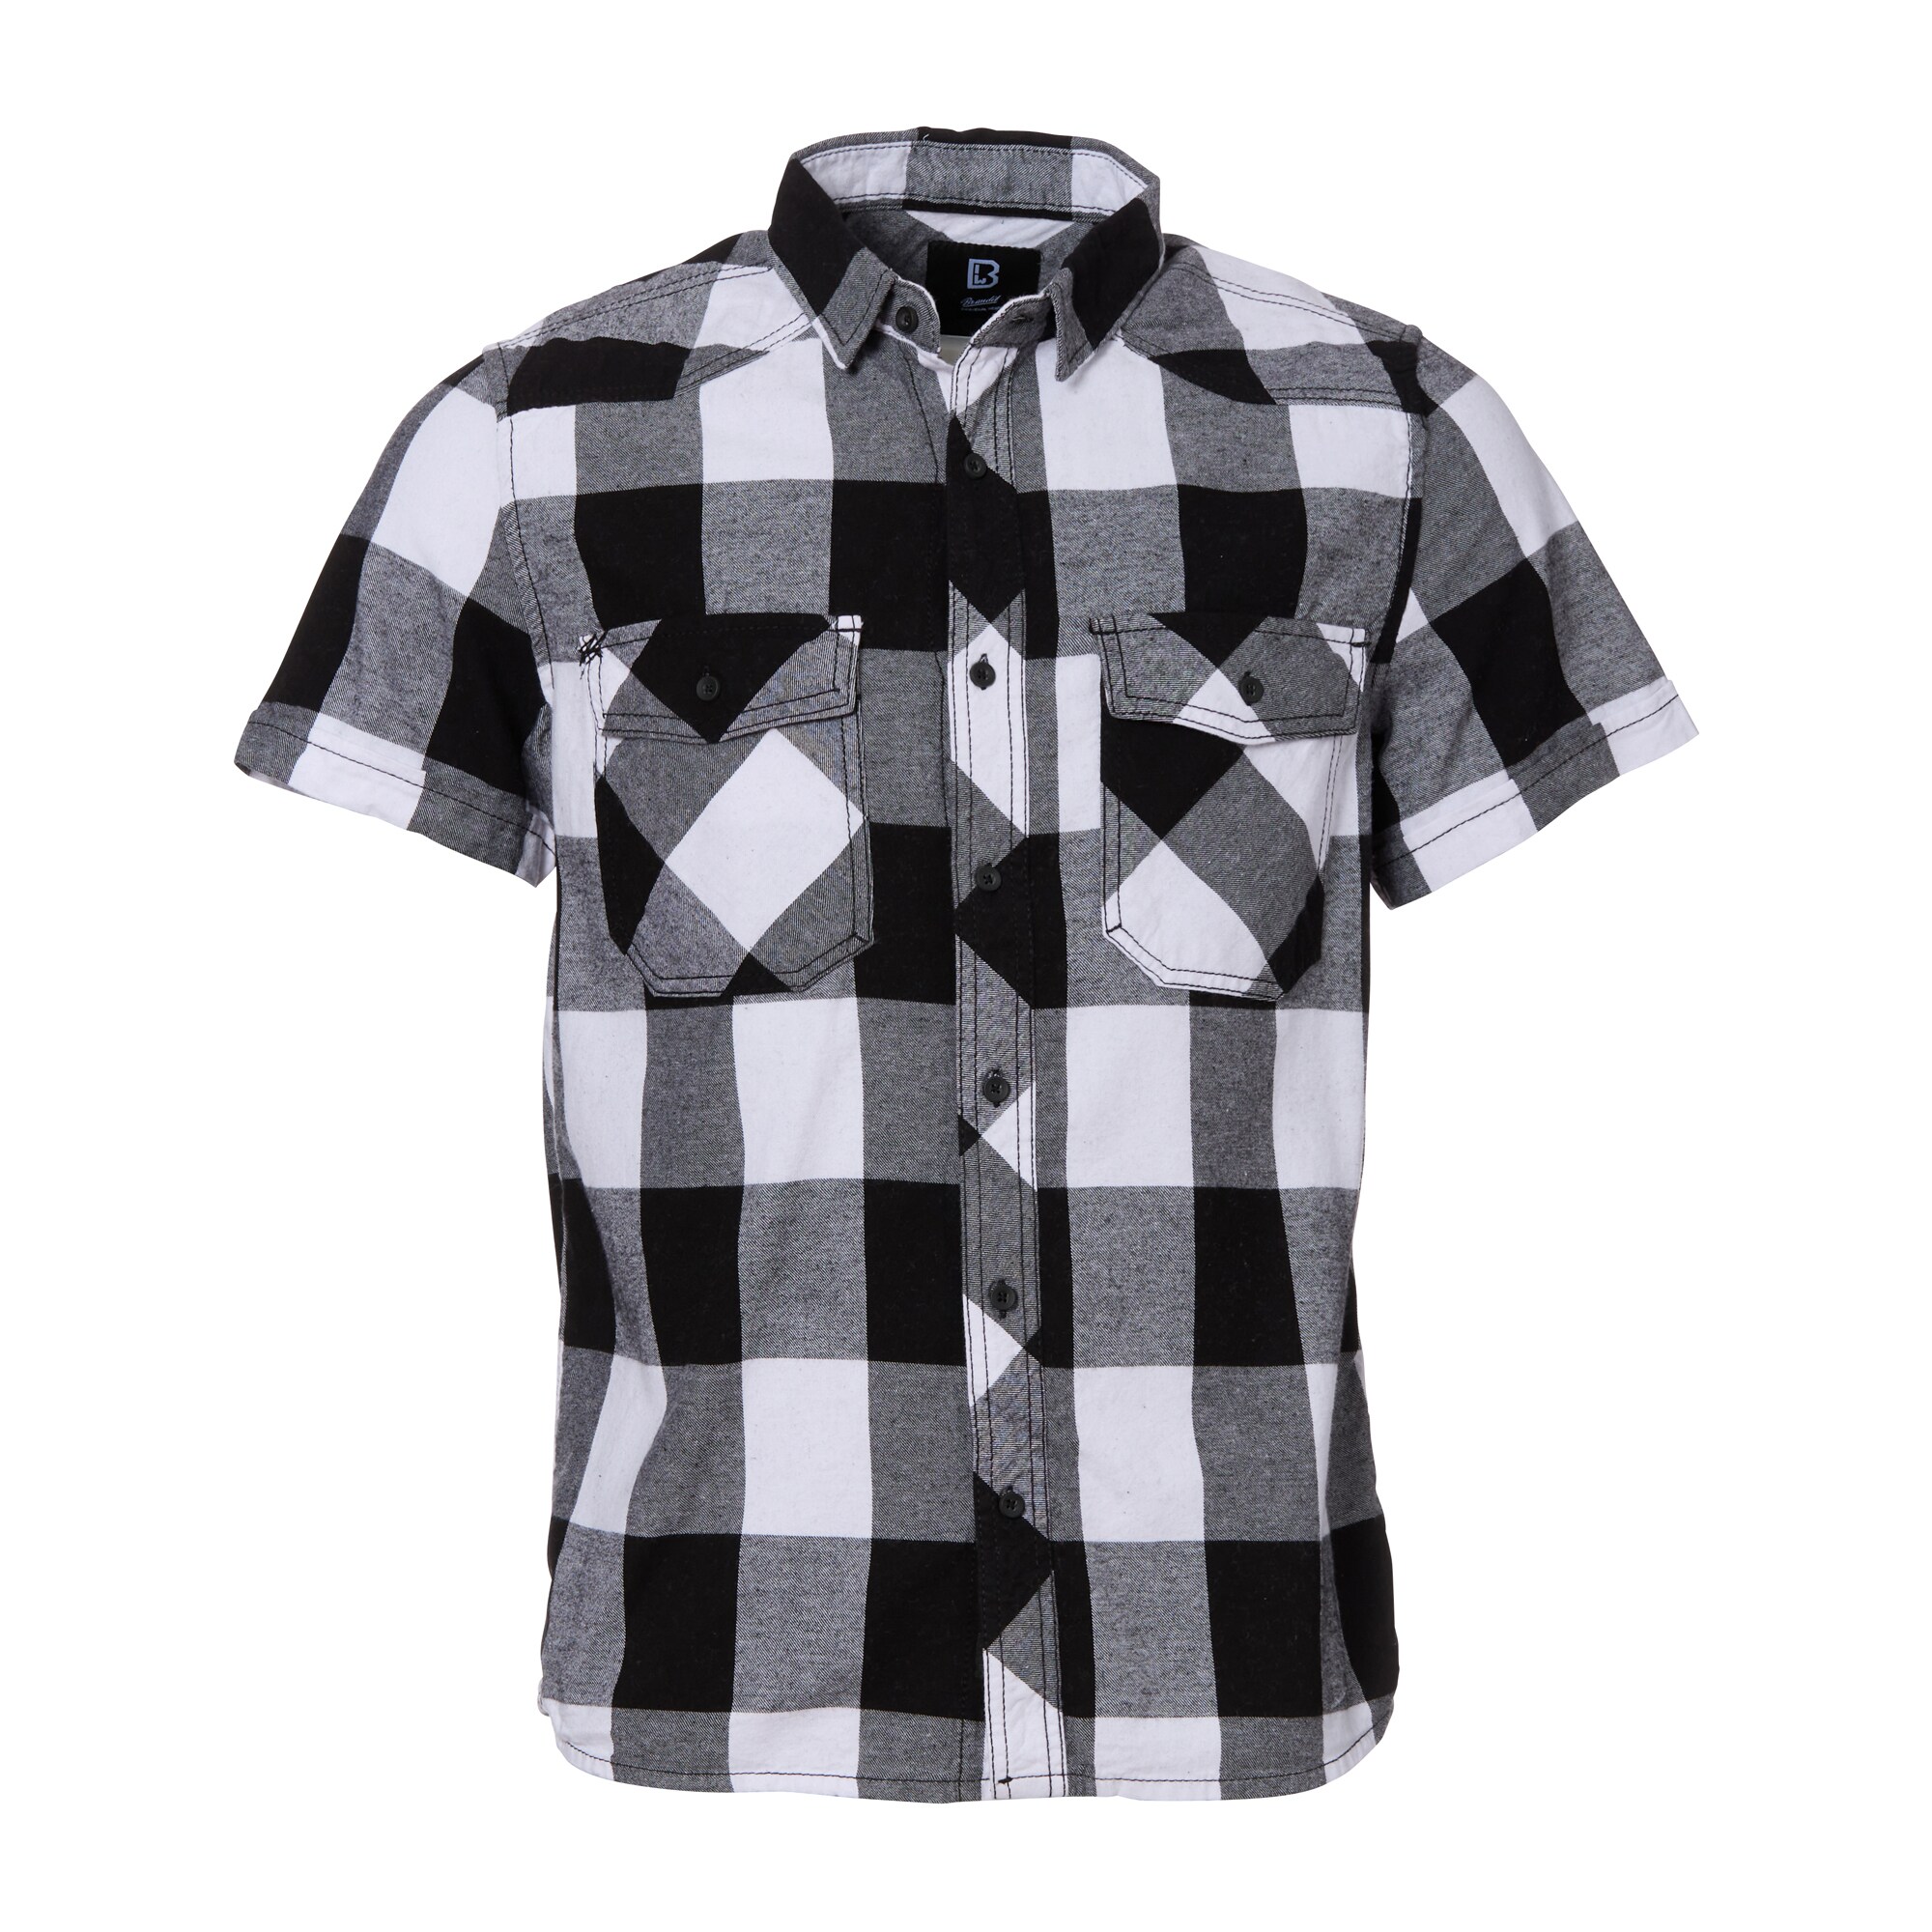 Purchase the Brandit Check Shirt Half Sleeve white black by ASMC